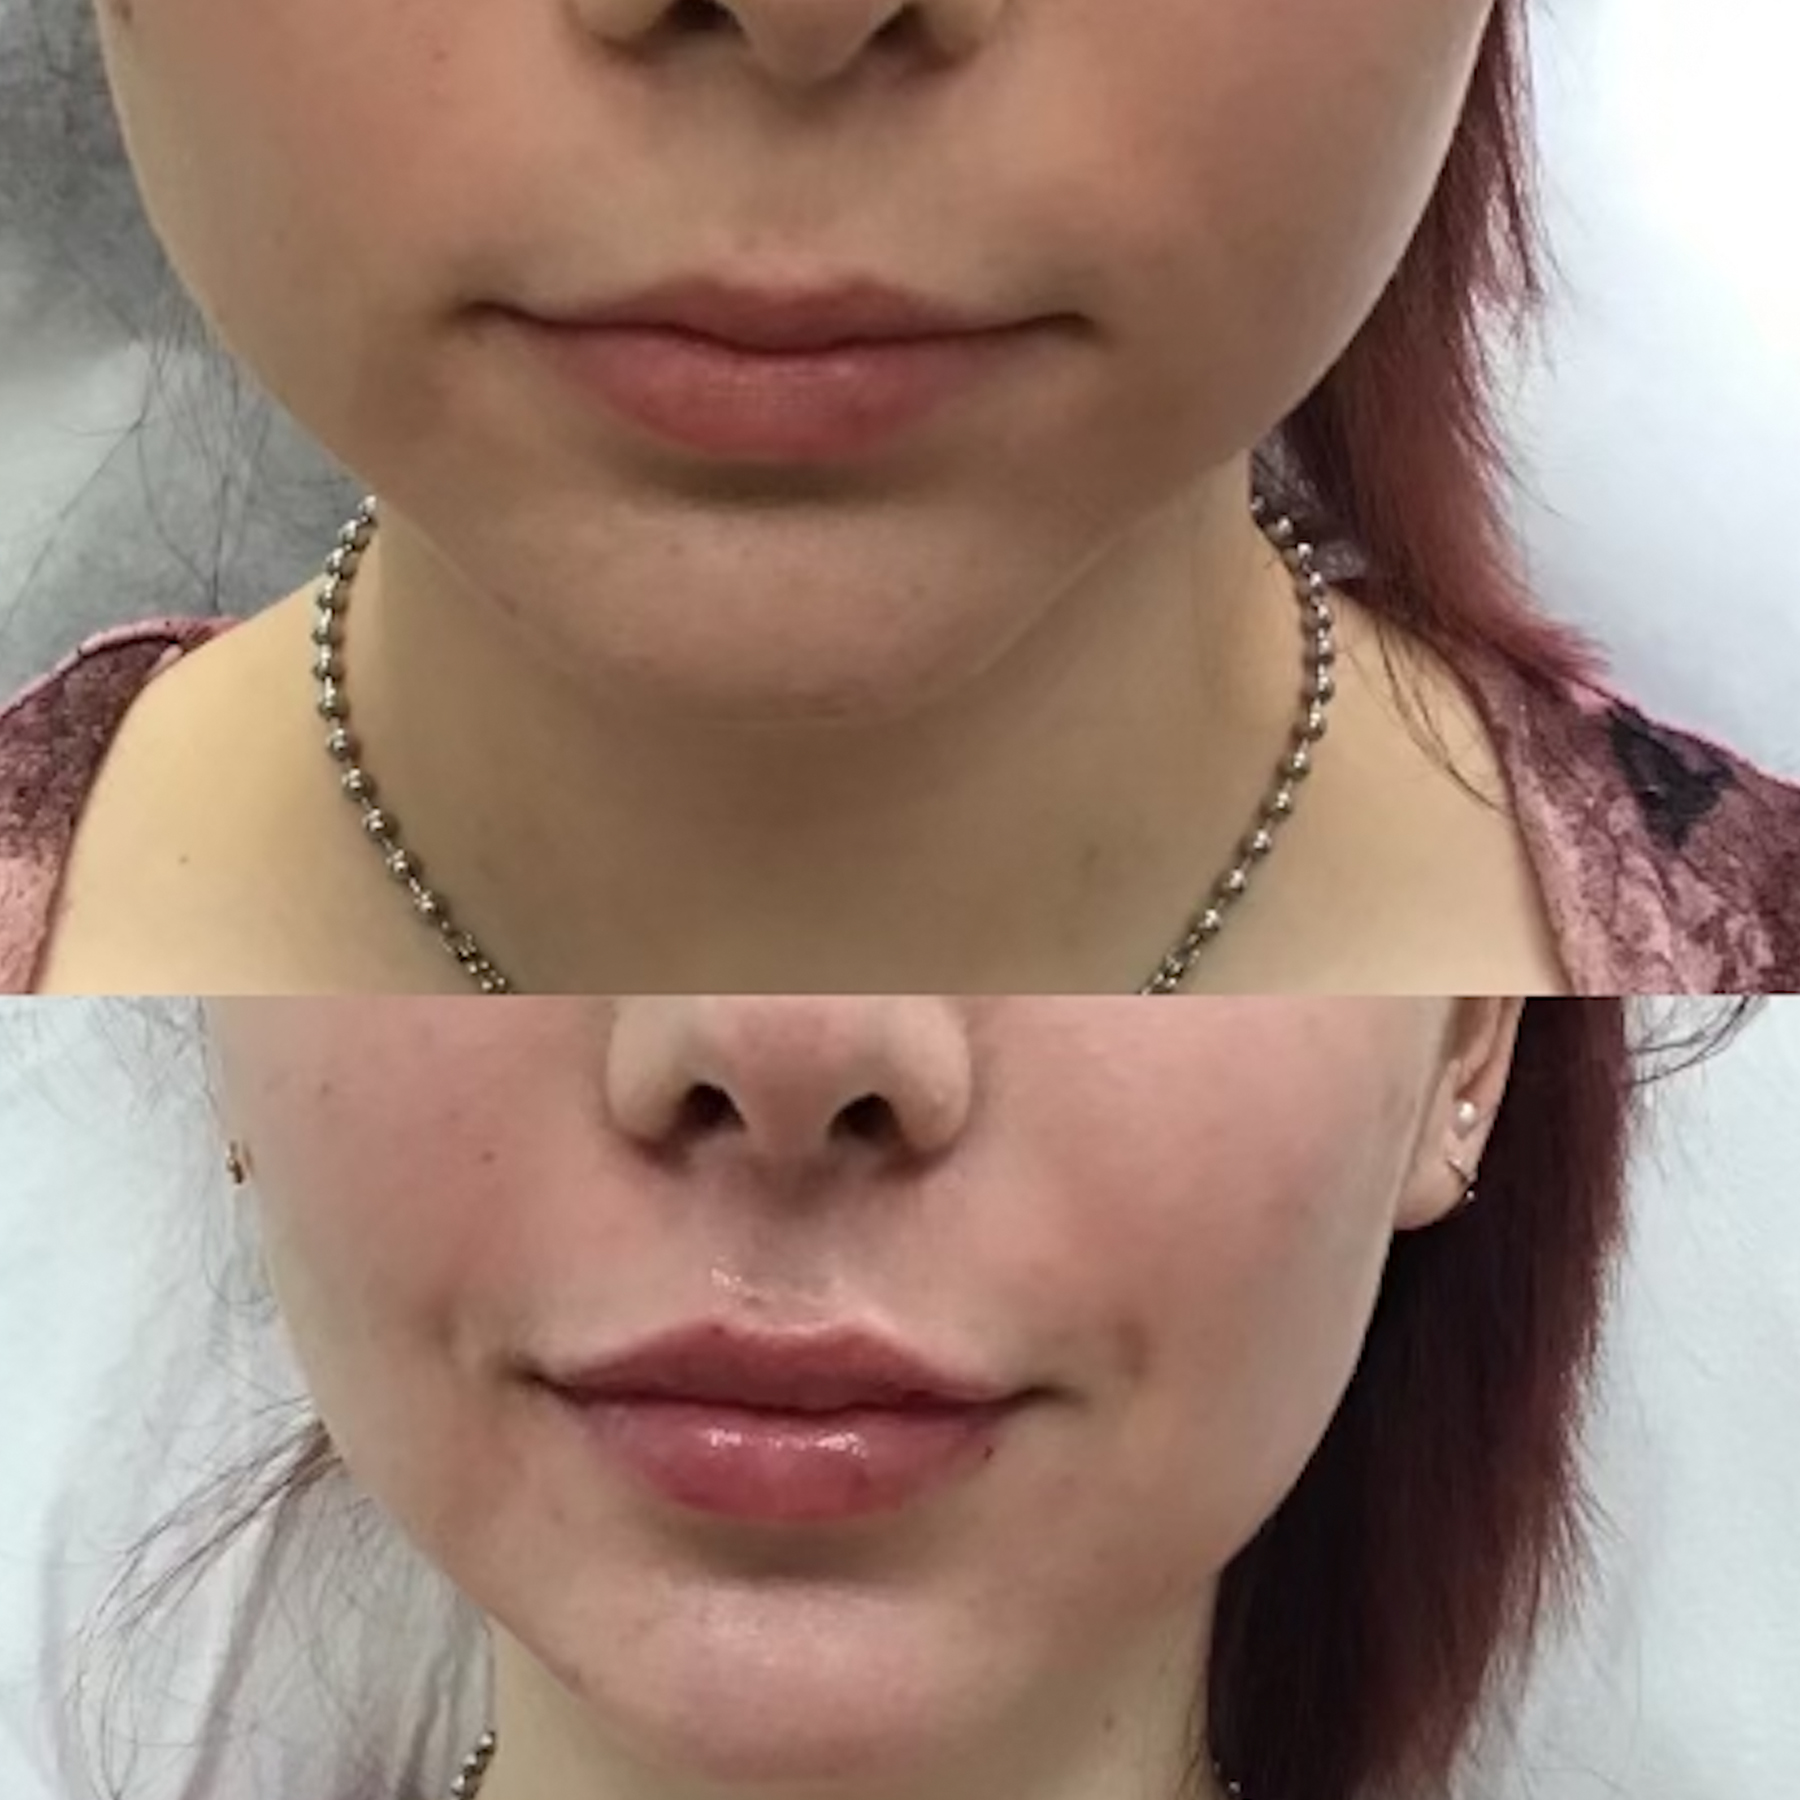 Lip augmentation with Restylane